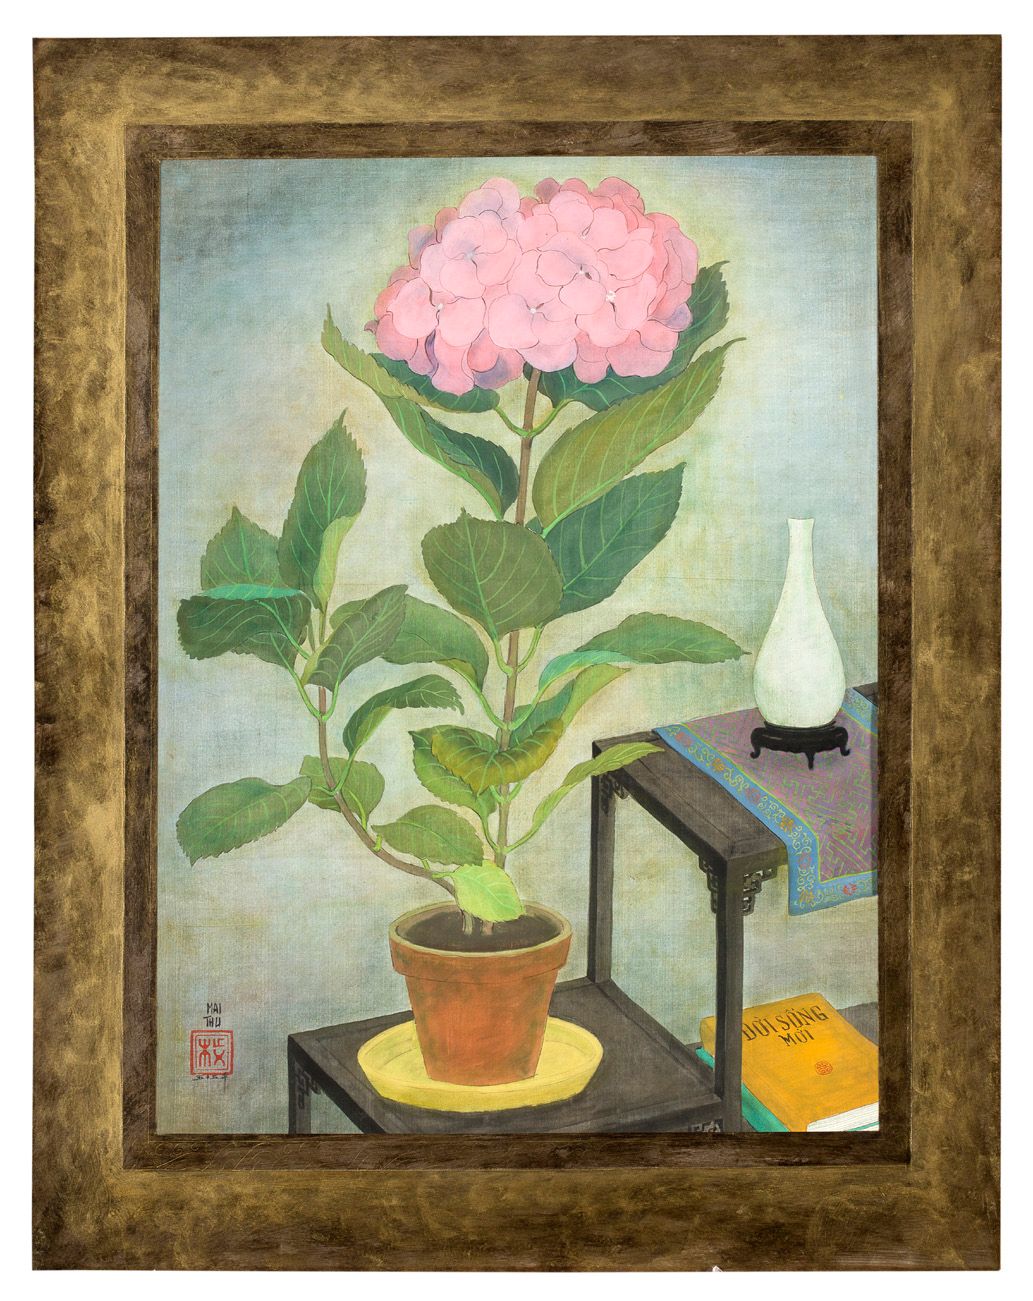 MAI TRUNG THU (1906-1980) 
Composición con hortensias, 1955

Tinta y colores sob&hellip;